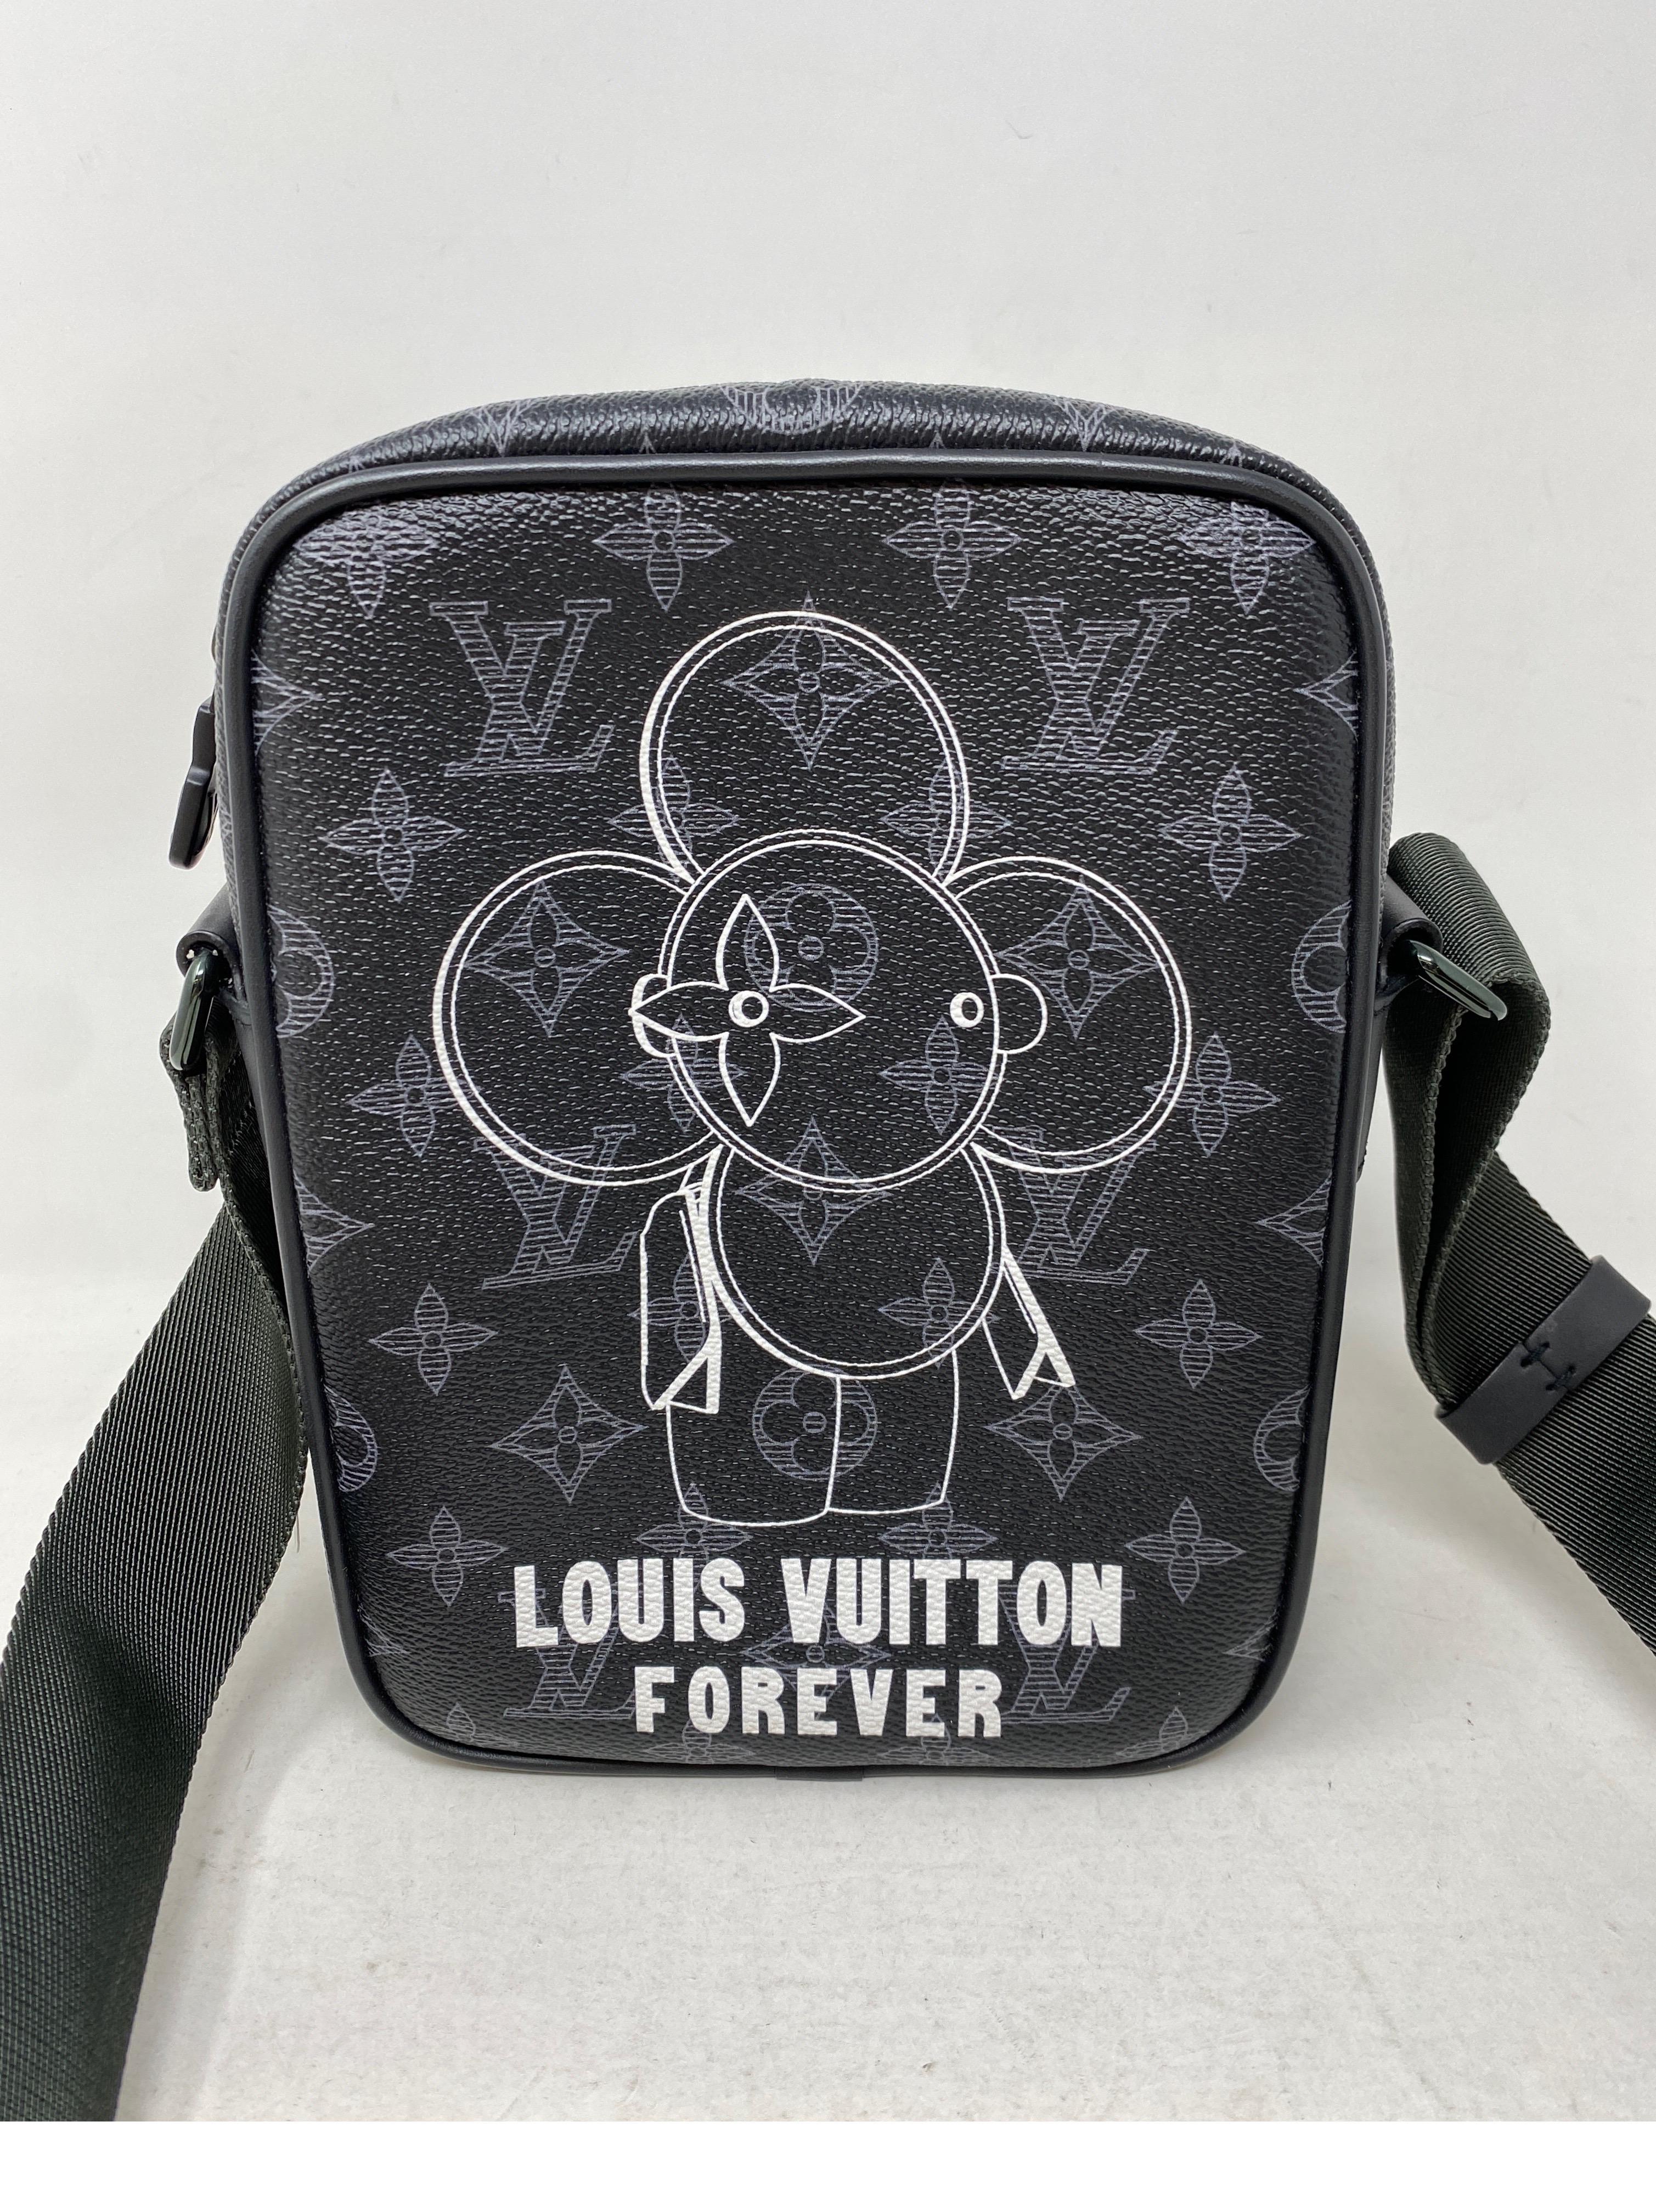 Black Louis Vuitton Forever Bag 